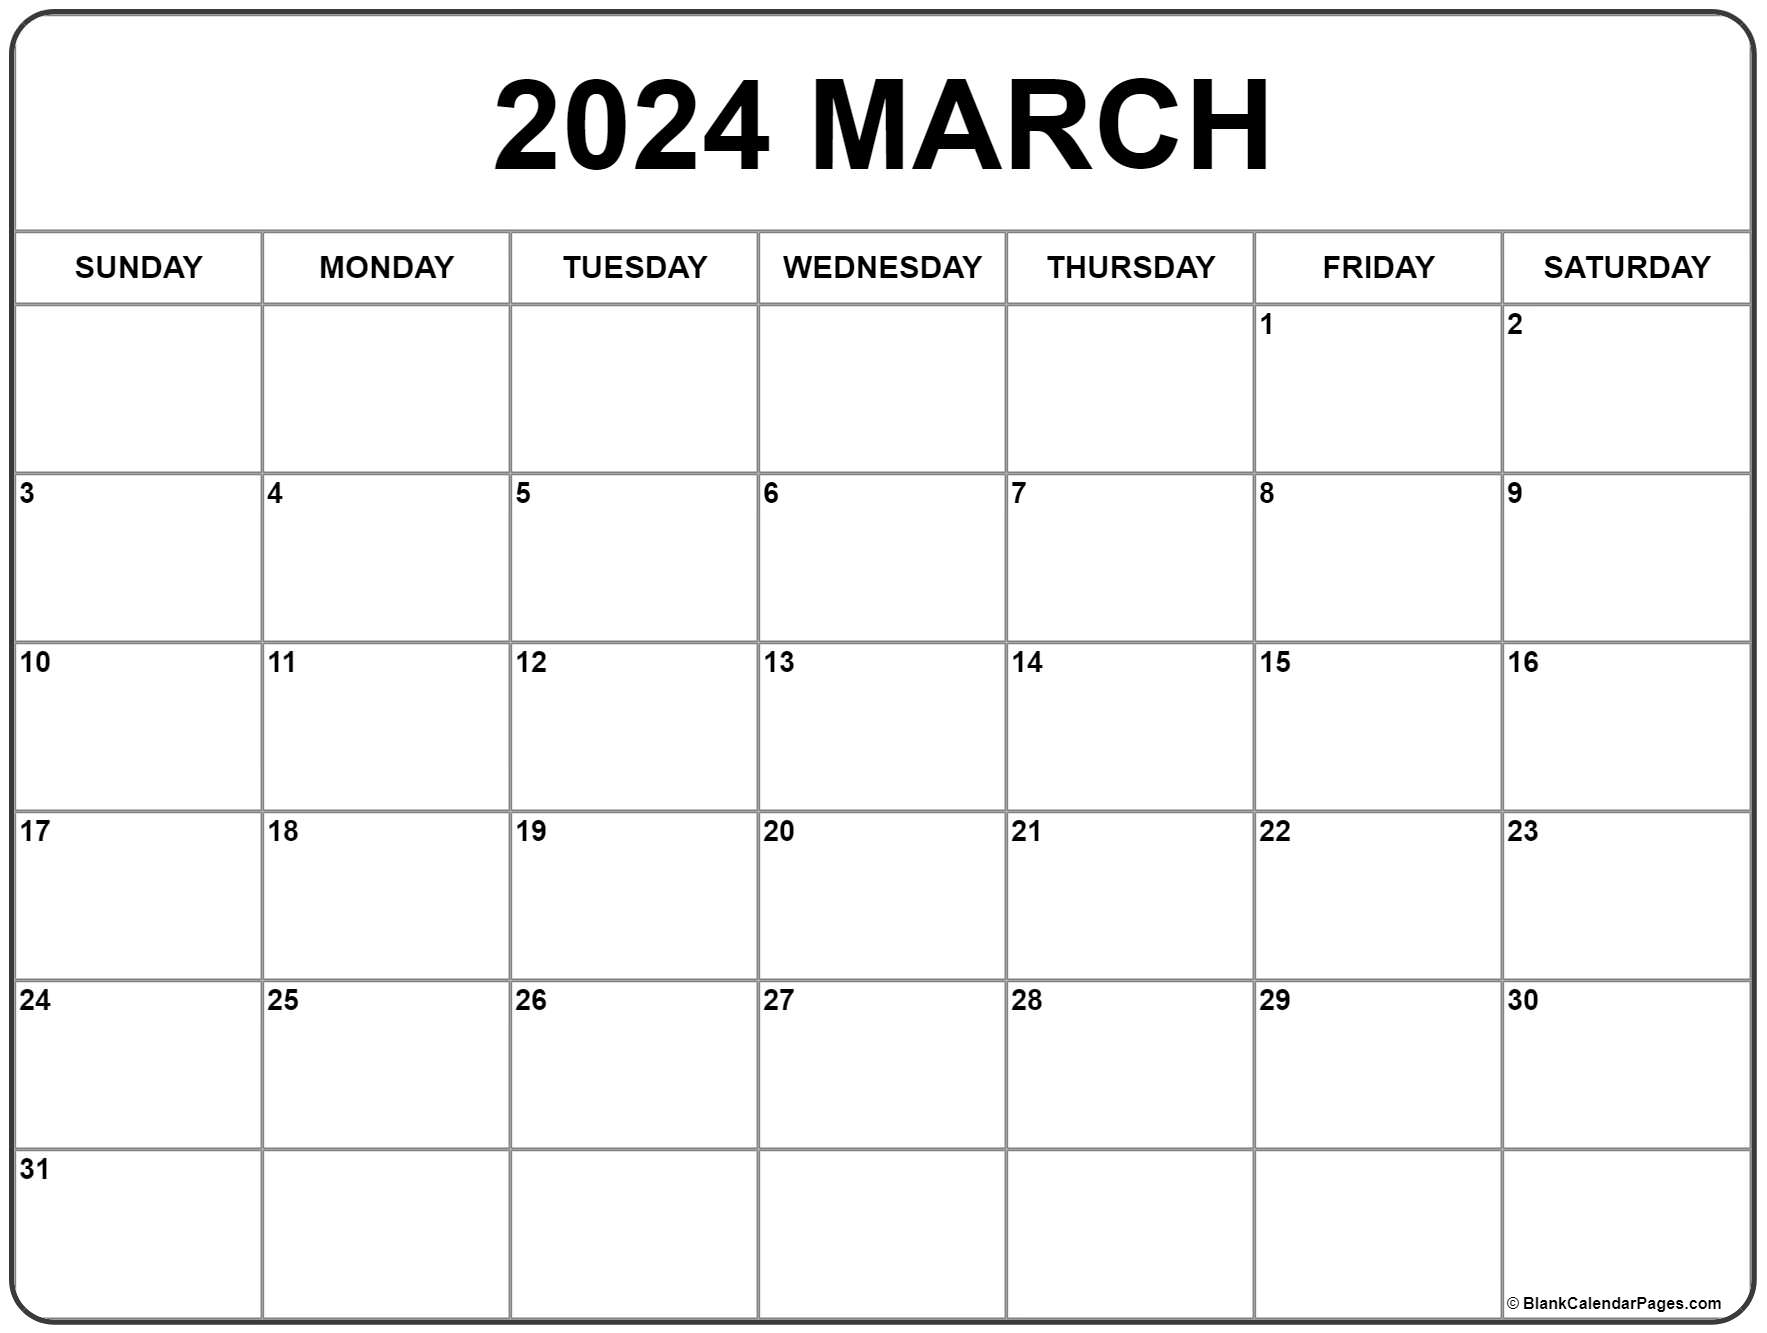 March Month Calendar 2022 March 2022 Calendar | Free Printable Calendar Templates